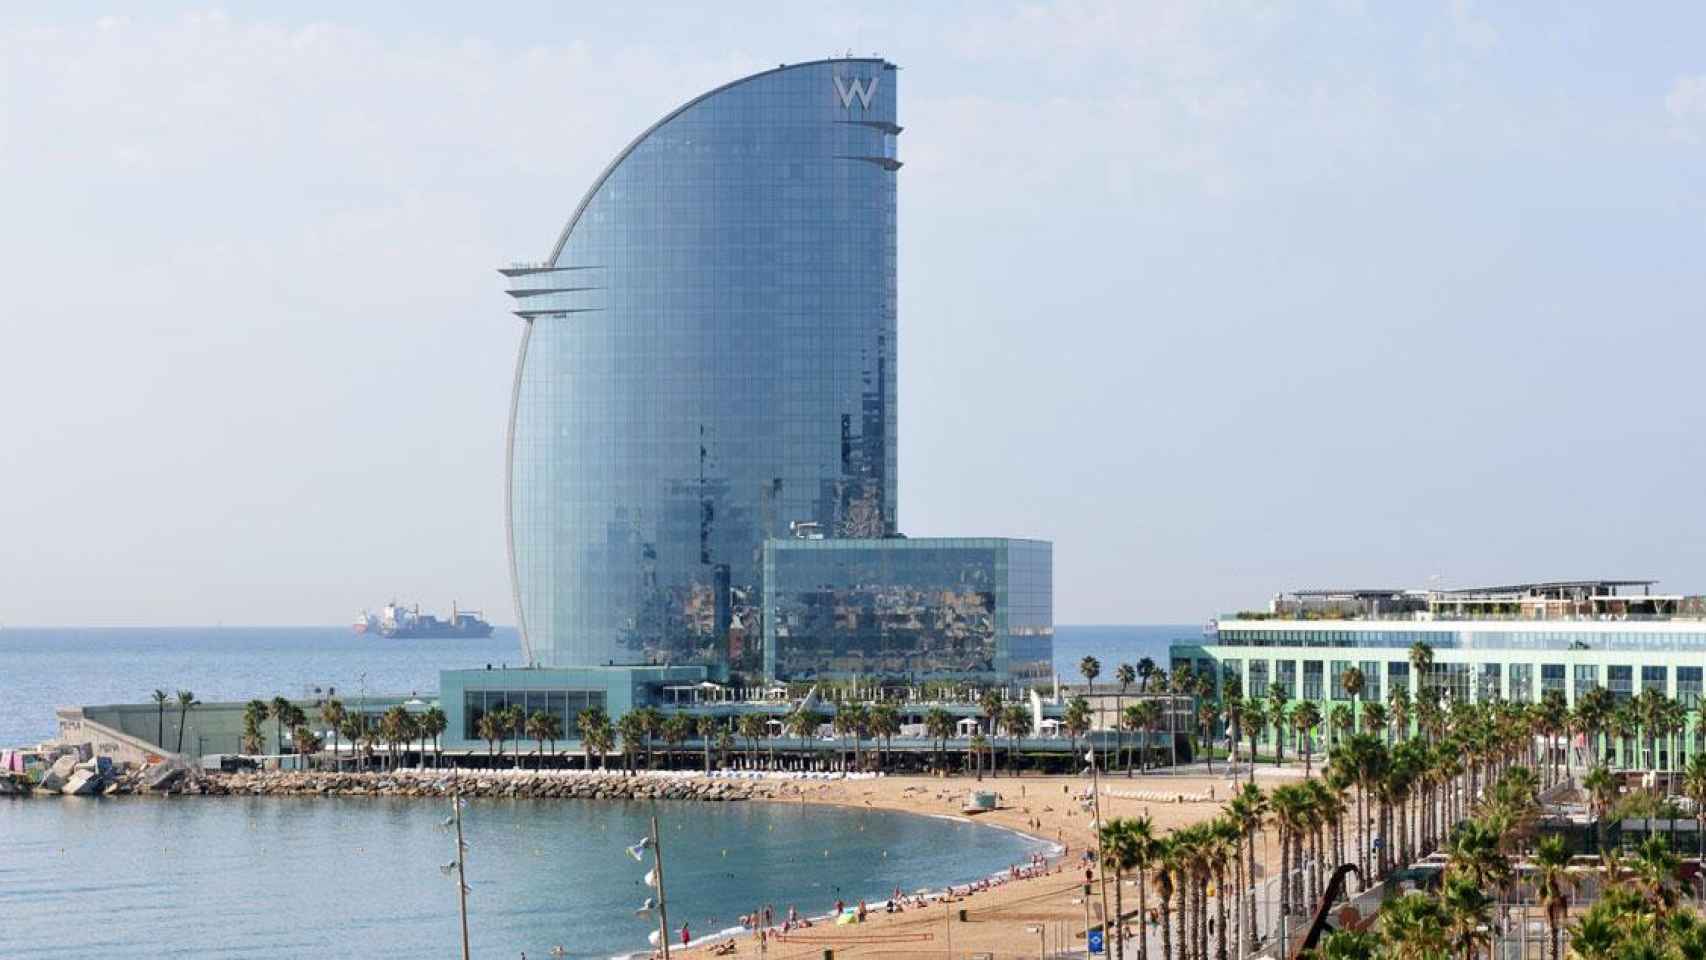 Imagen del hotel W Barcelona, situado junto a la playa de Barceloneta / Wikipedia